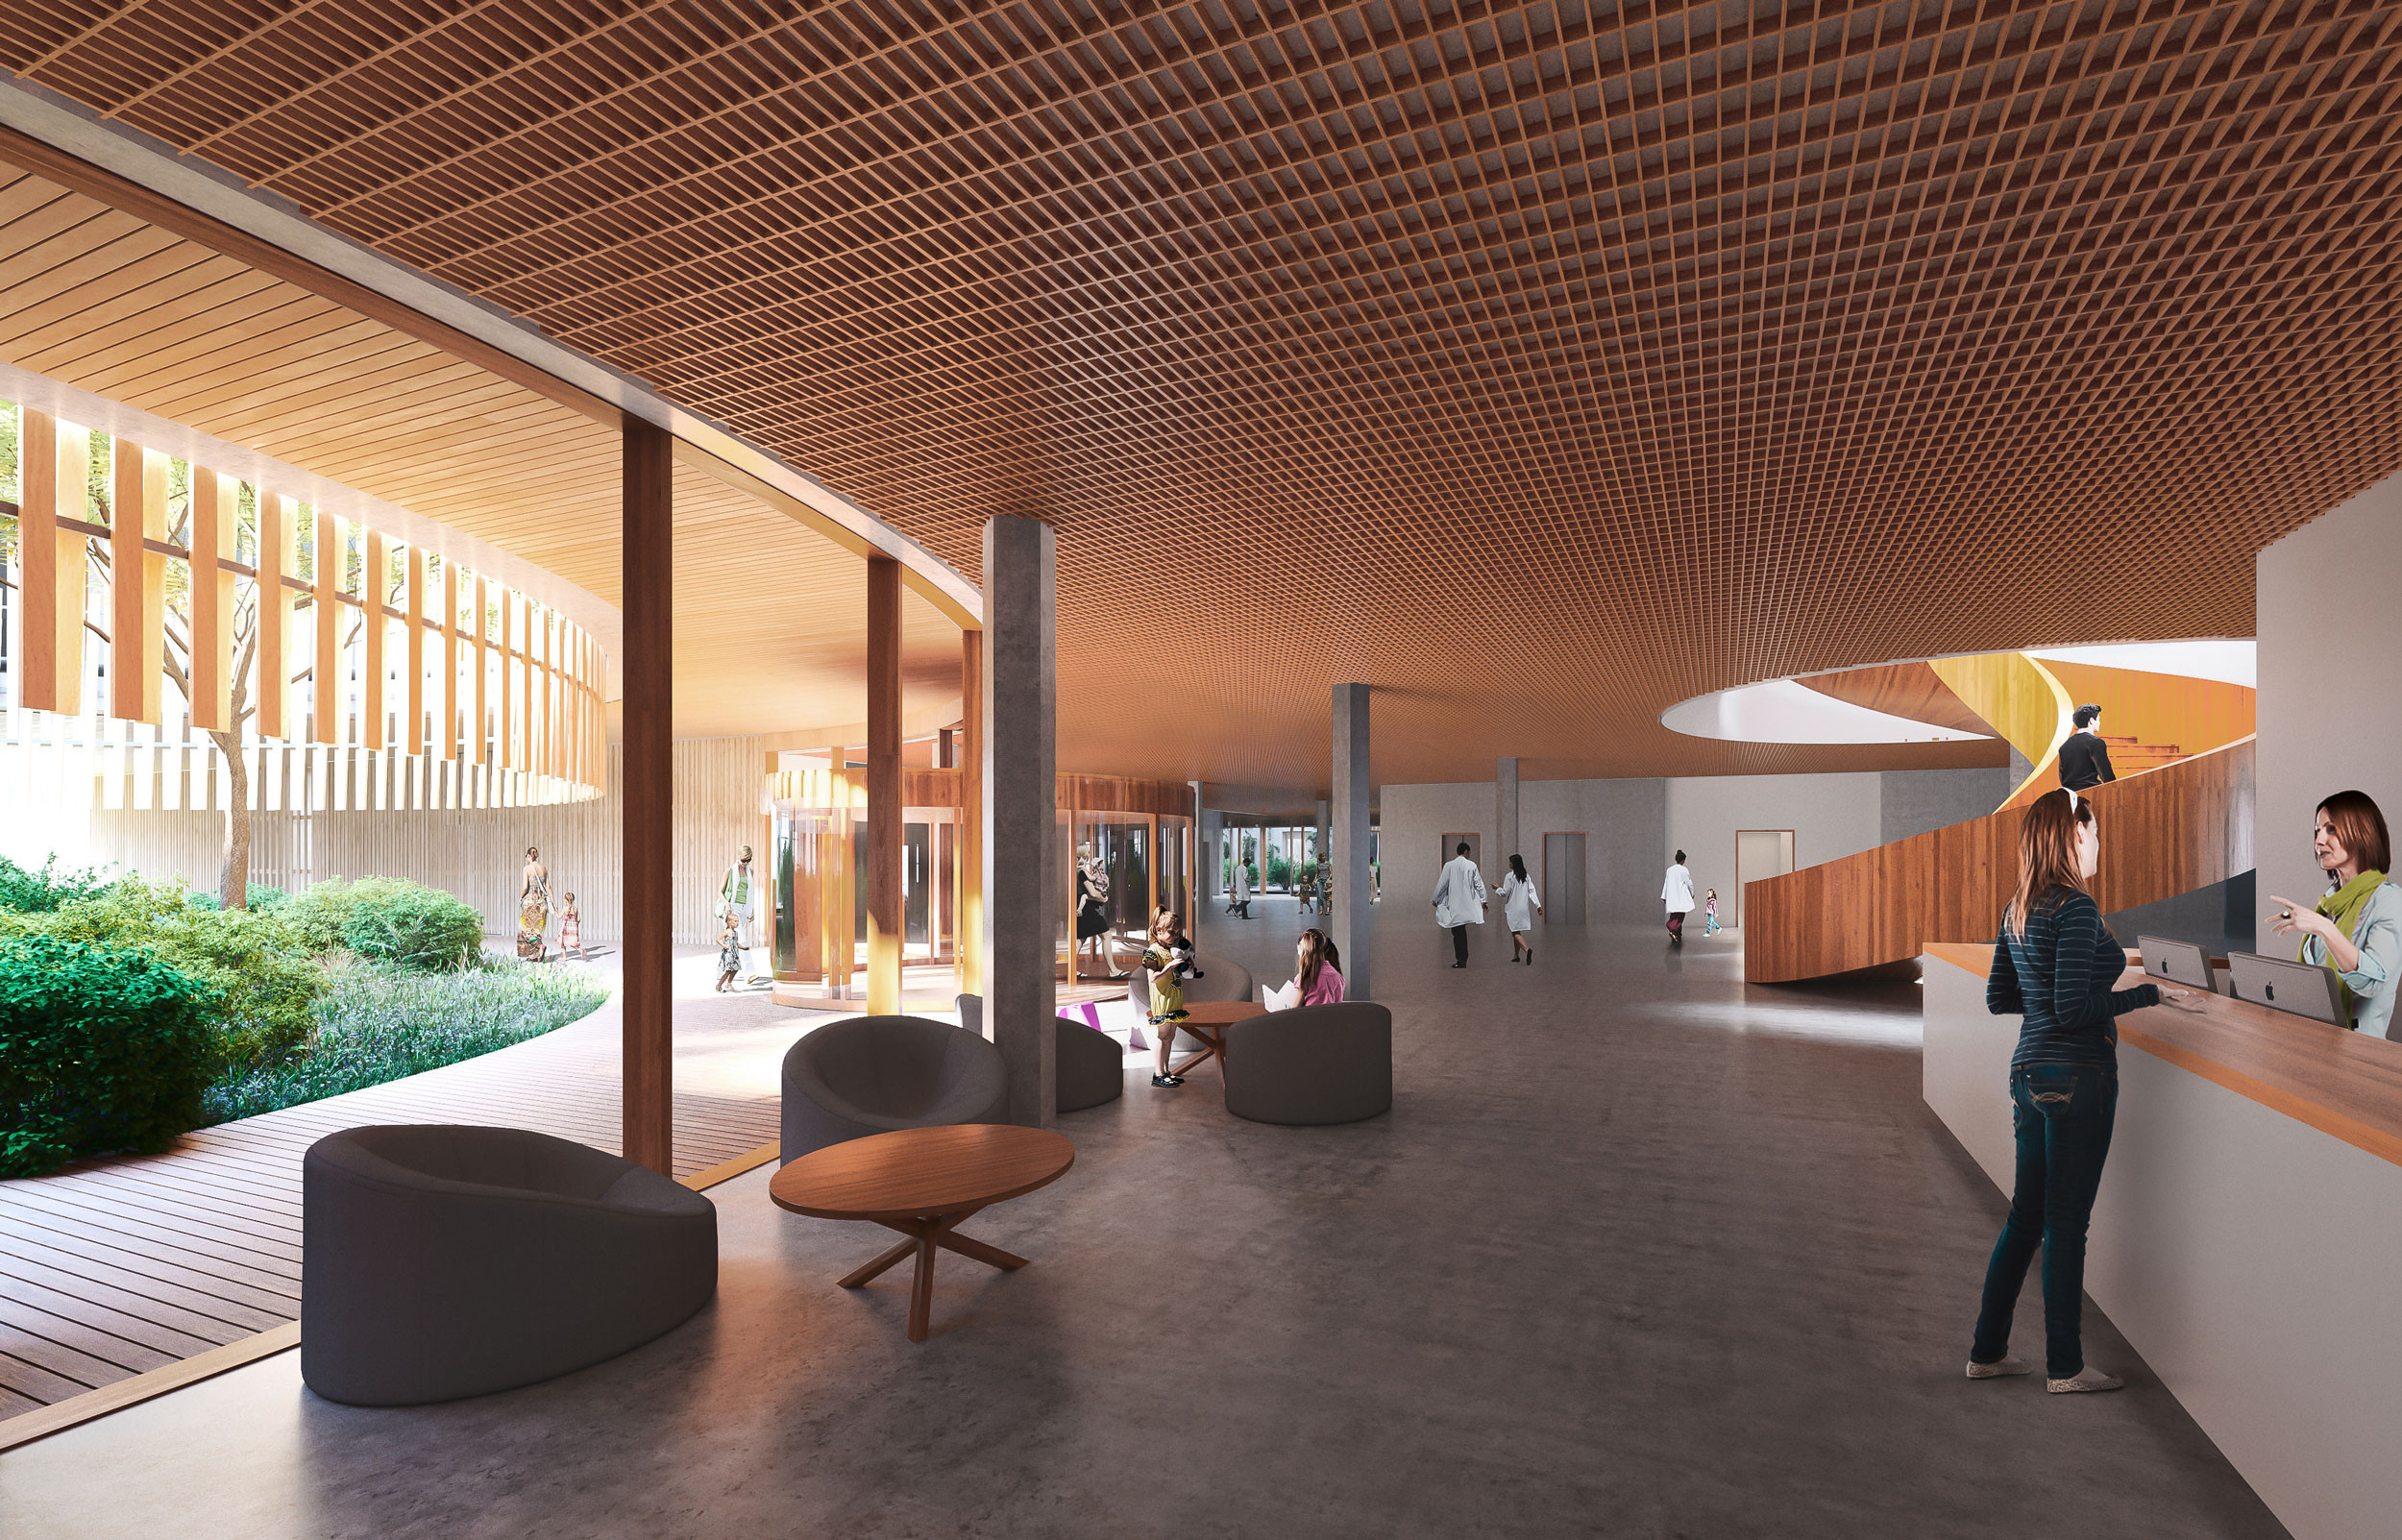 Neubau Akutspital Visualisierung Foyer und Anmeldung